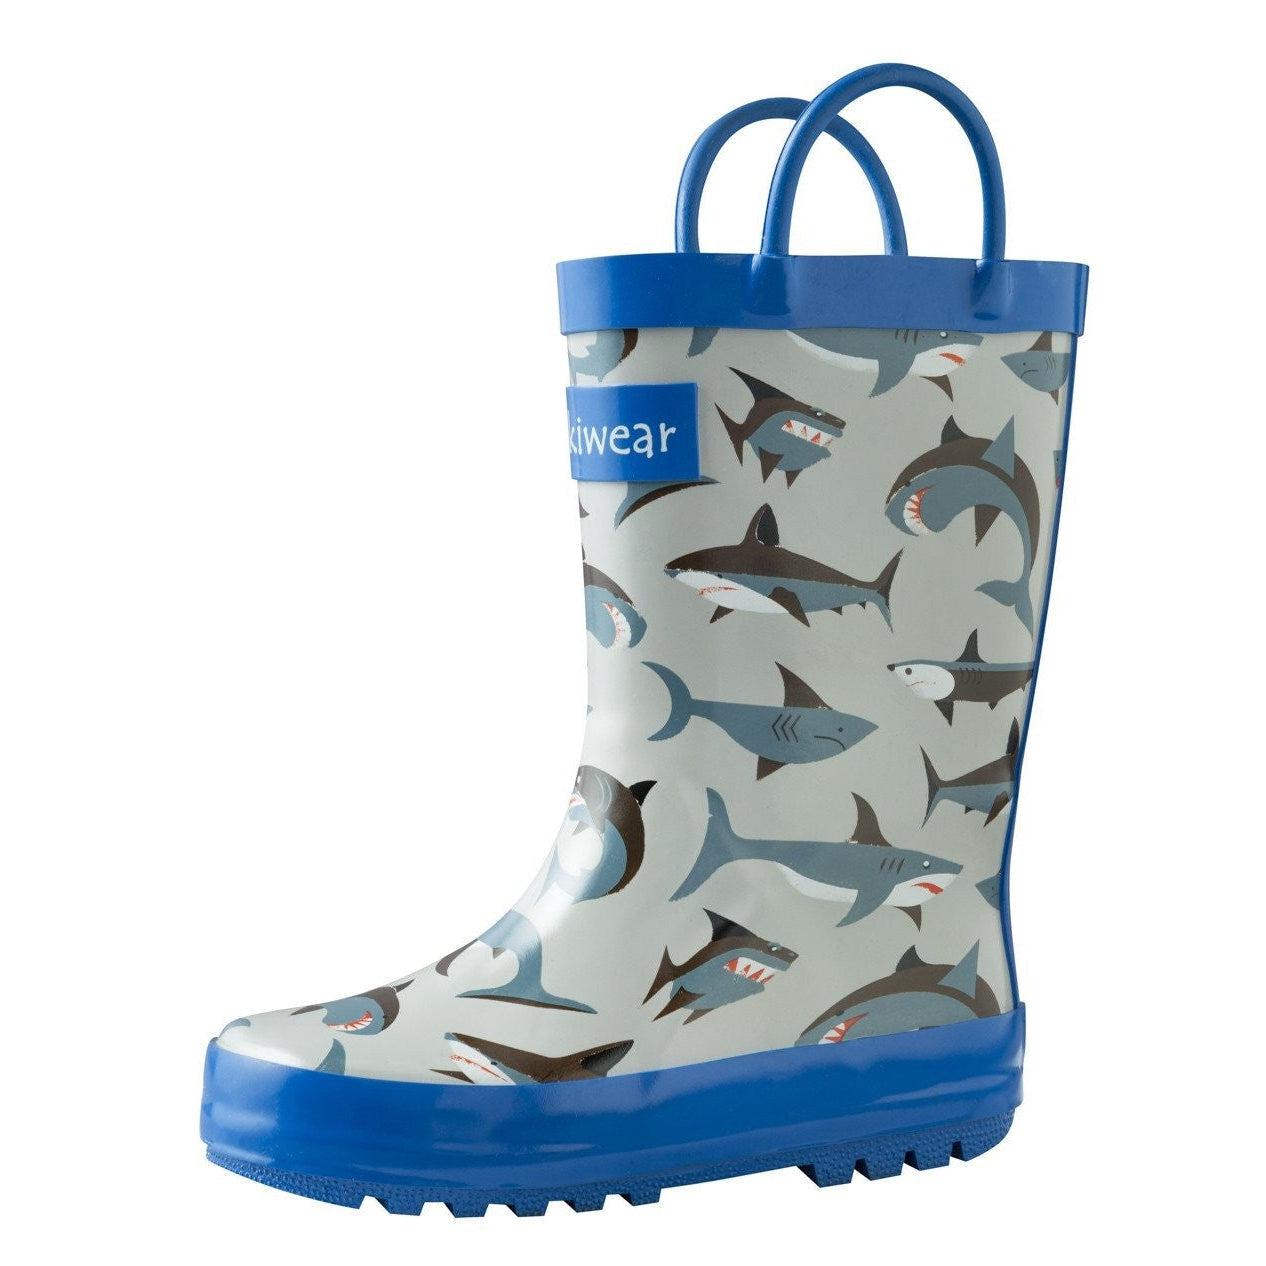 OAKI - Shark Frenzy Loop Handle Rubber Rain Boots